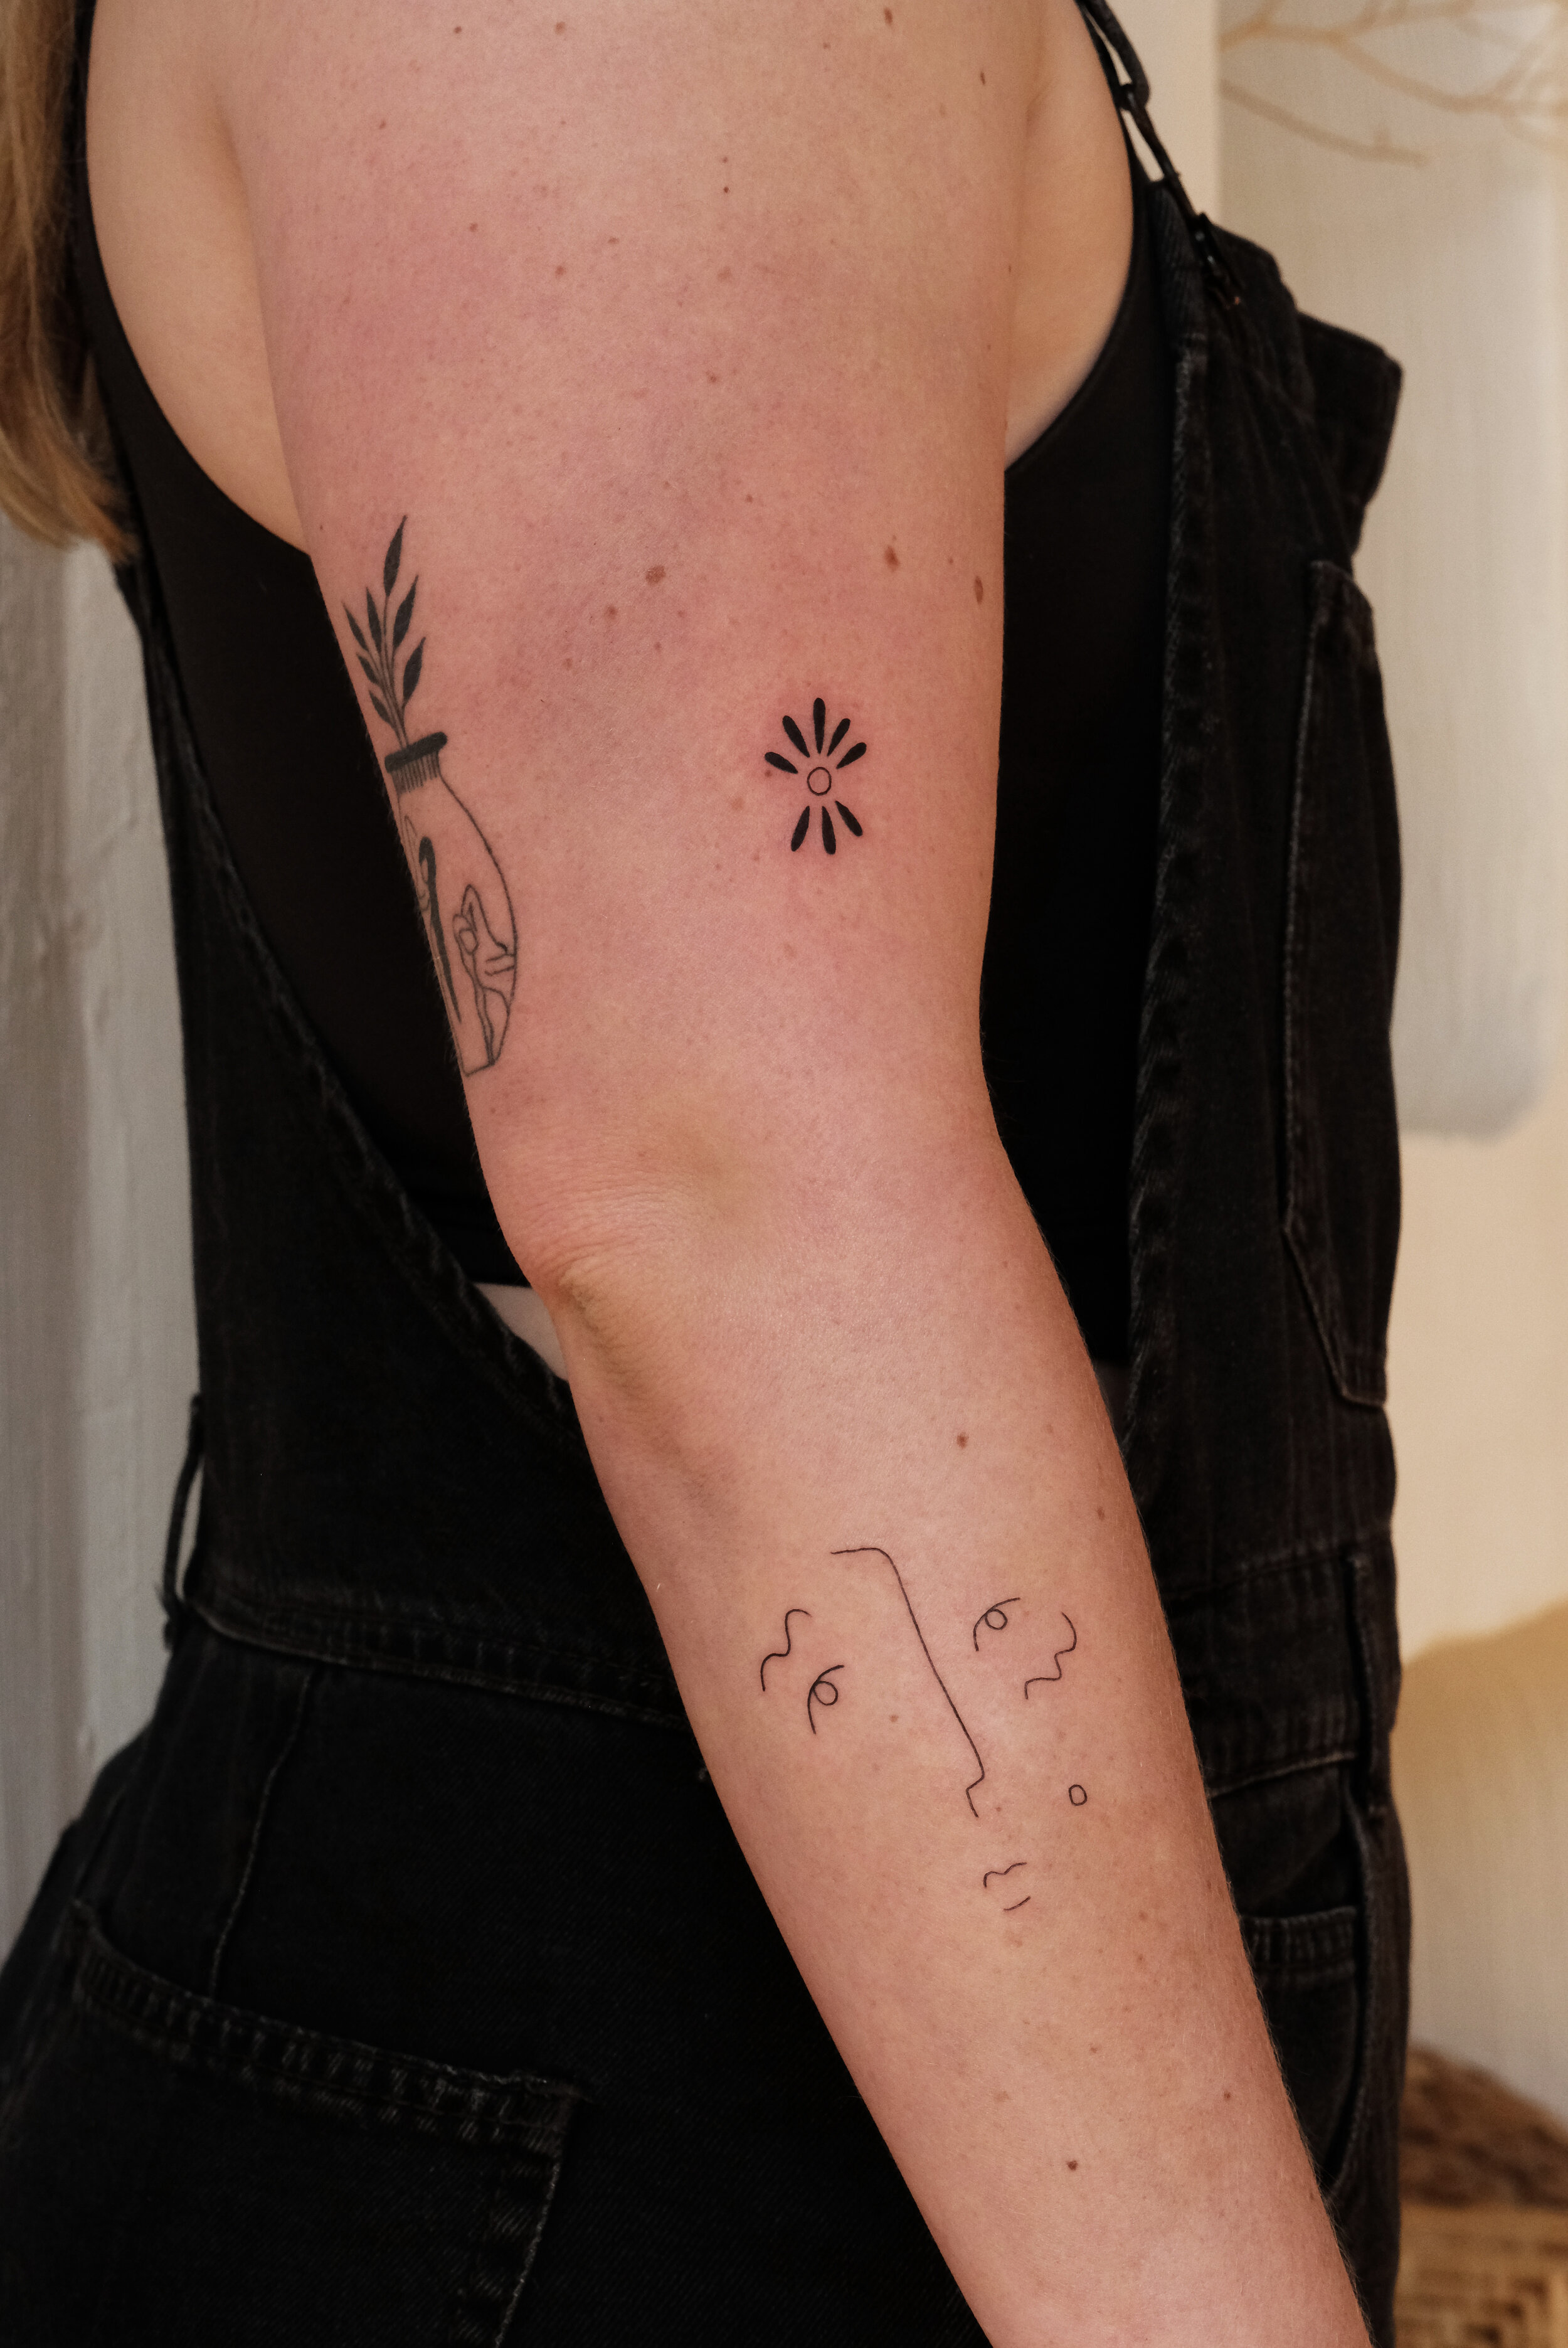 sydney E tattoo.jpg